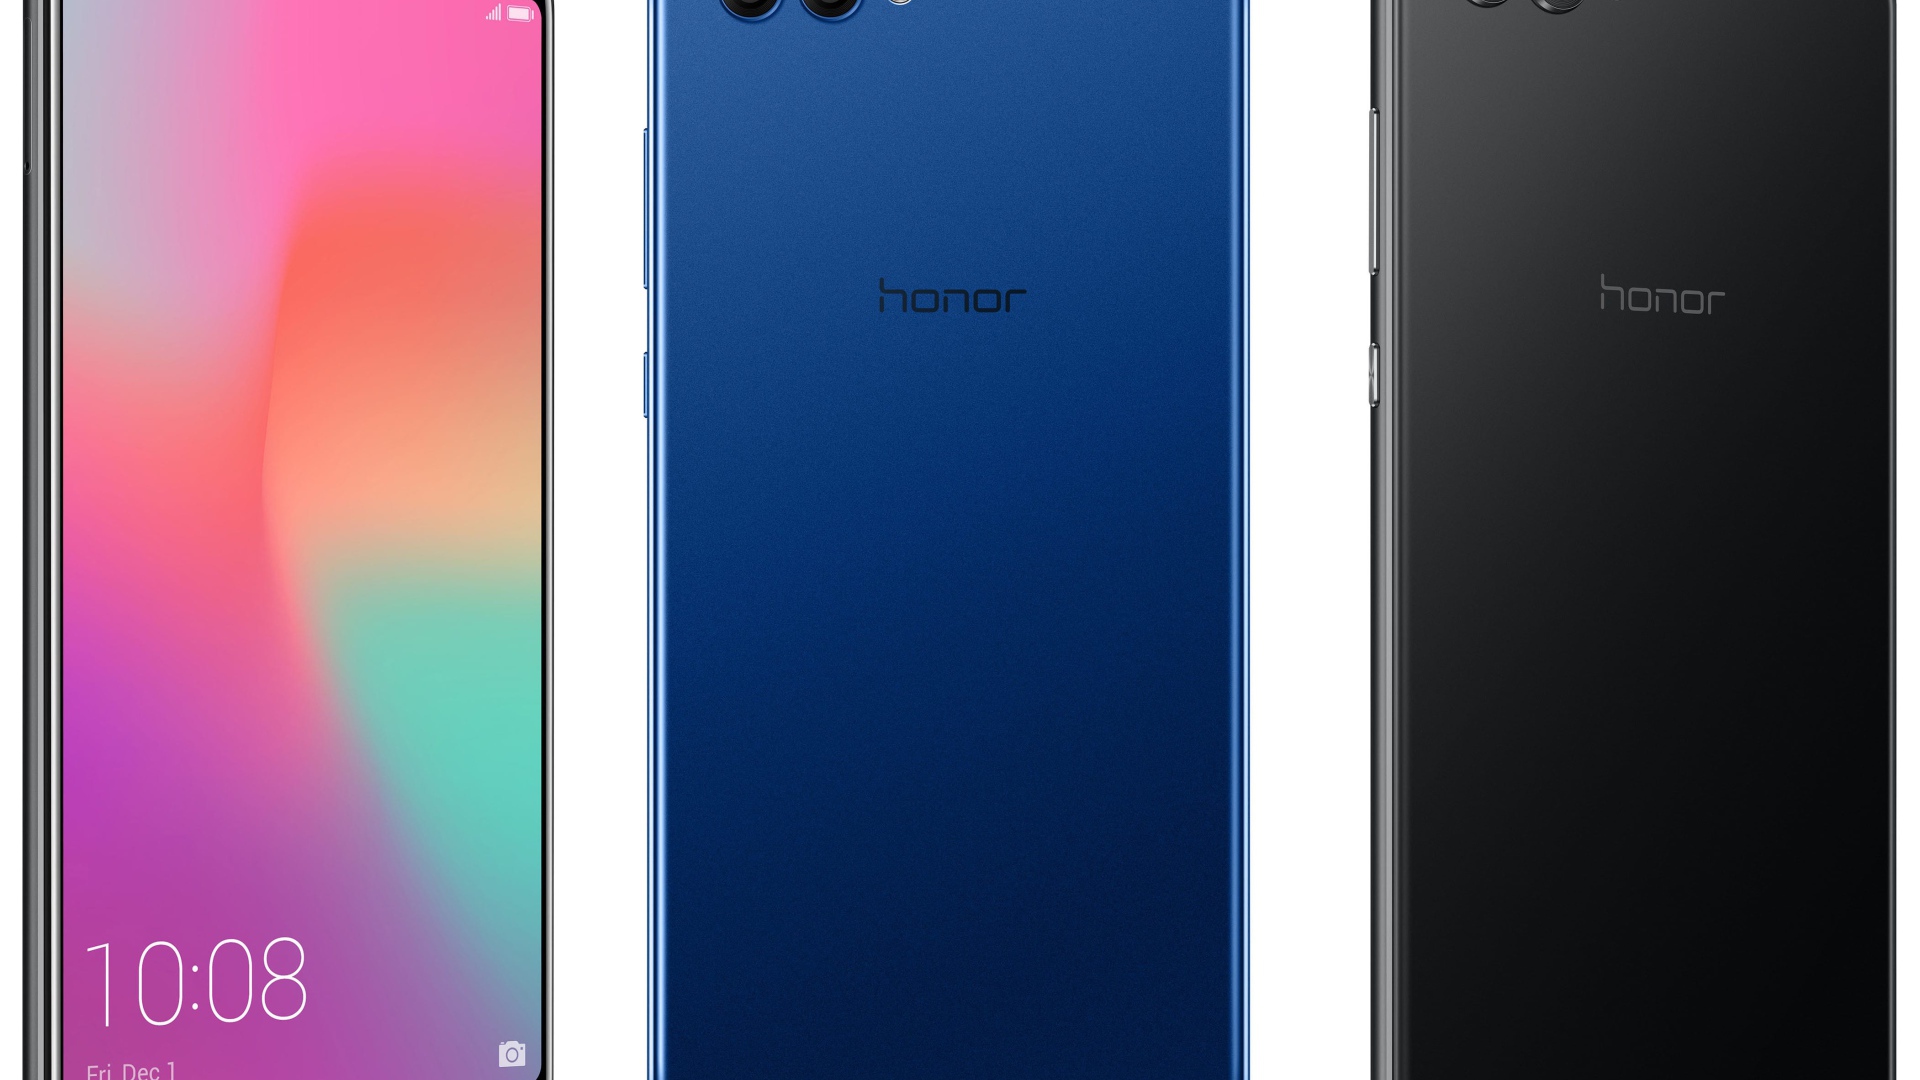 Новый смартфон Honor 10 на белом фоне